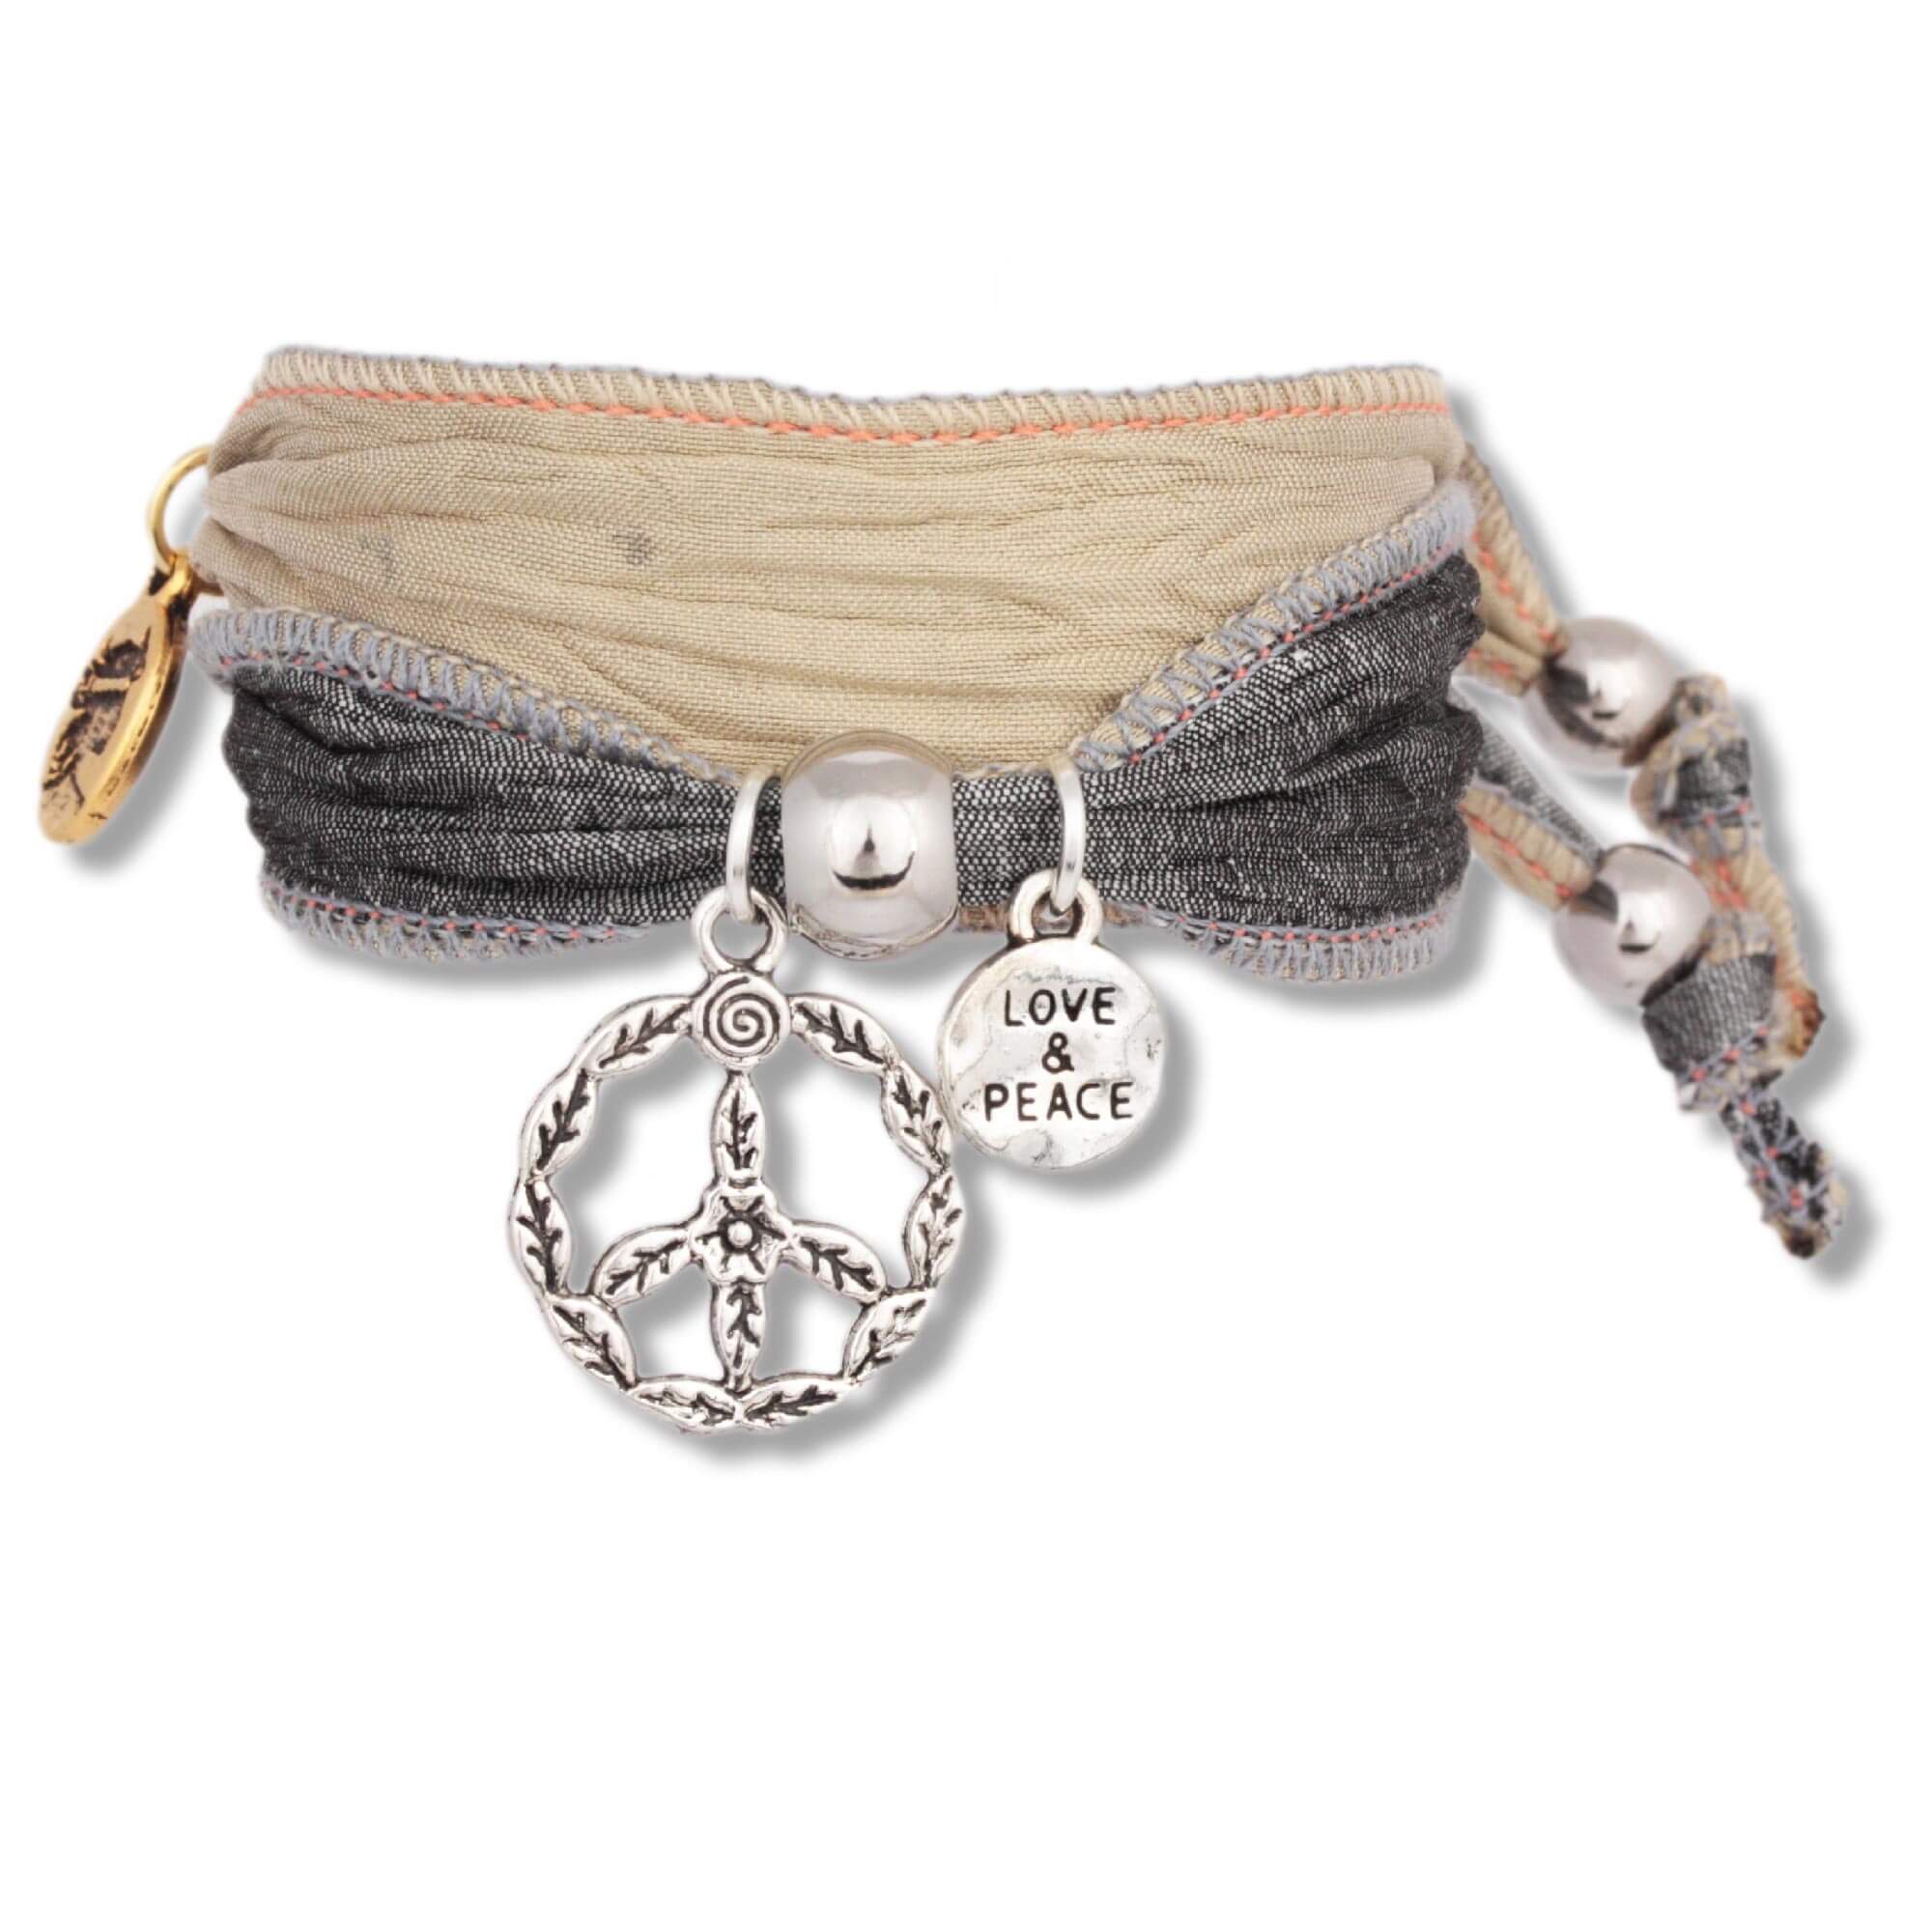 Silver-Nature - Love & Peace Bracelet made from Sari fabrics